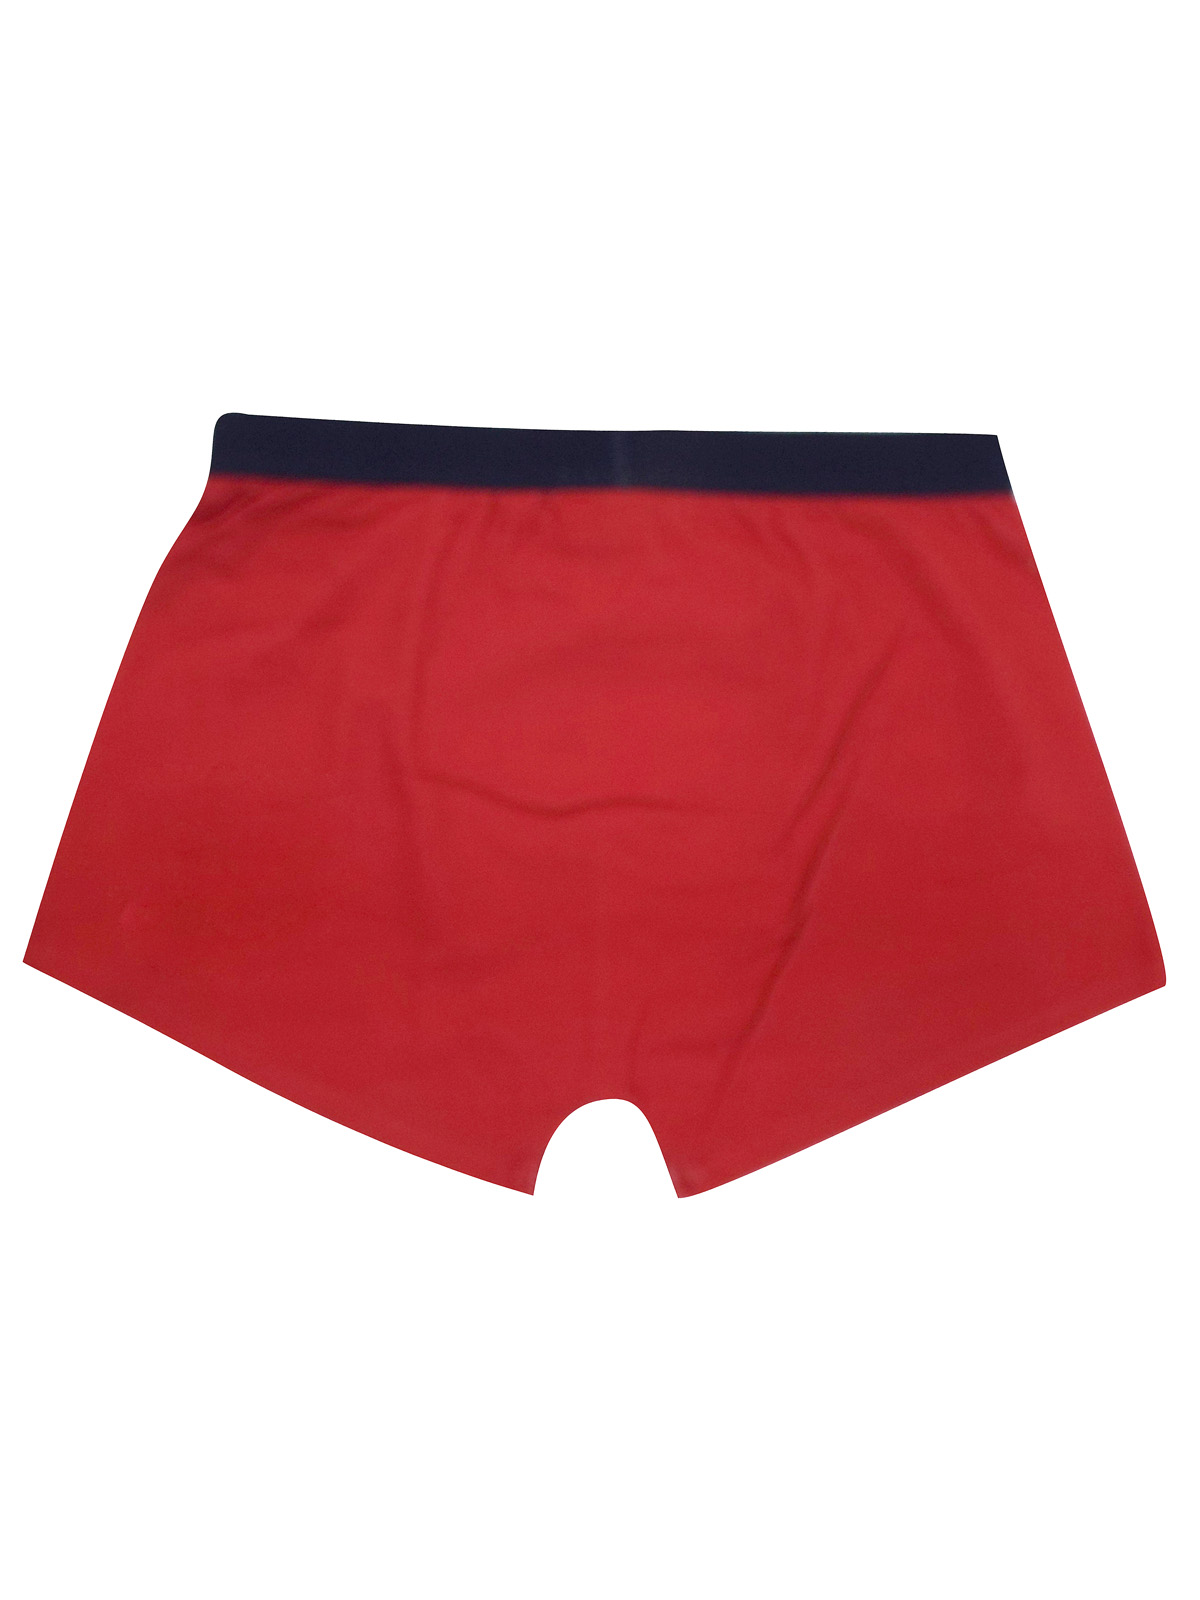 Matalan - - Matalan RED Festive Minions Boxer Shorts - Size Small to XLarge